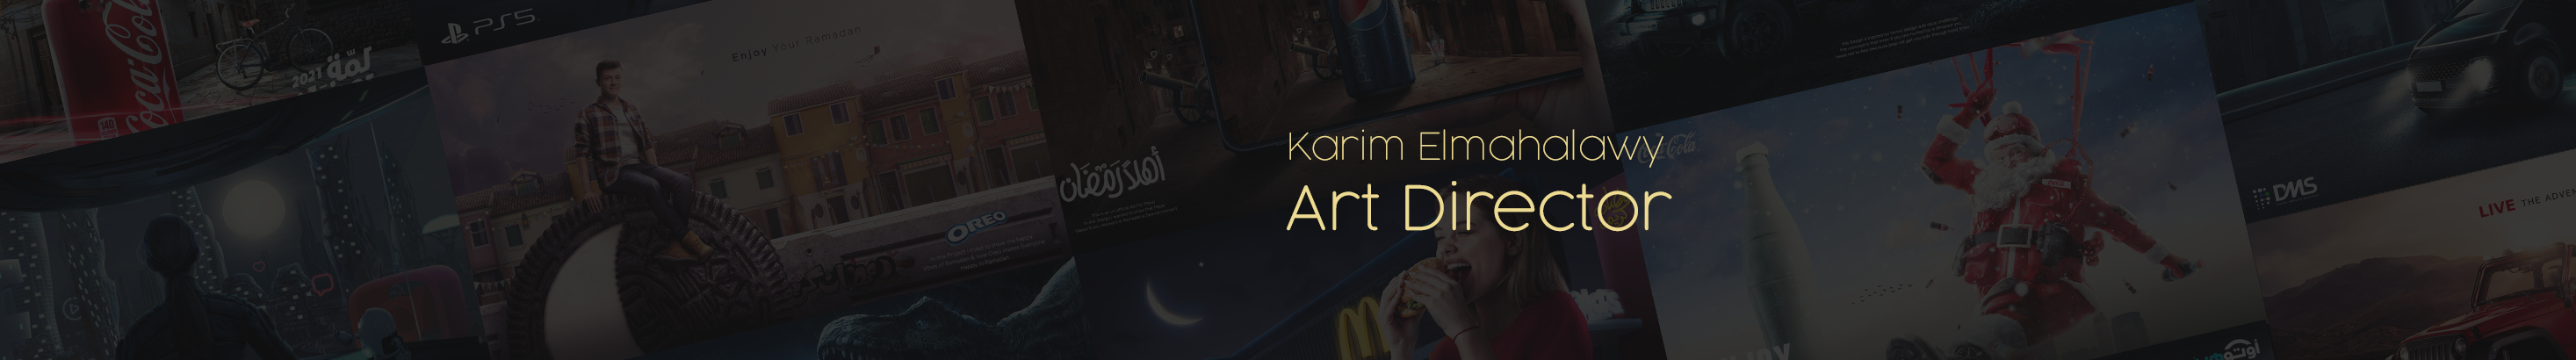 Karim Elmahalawy's profile banner